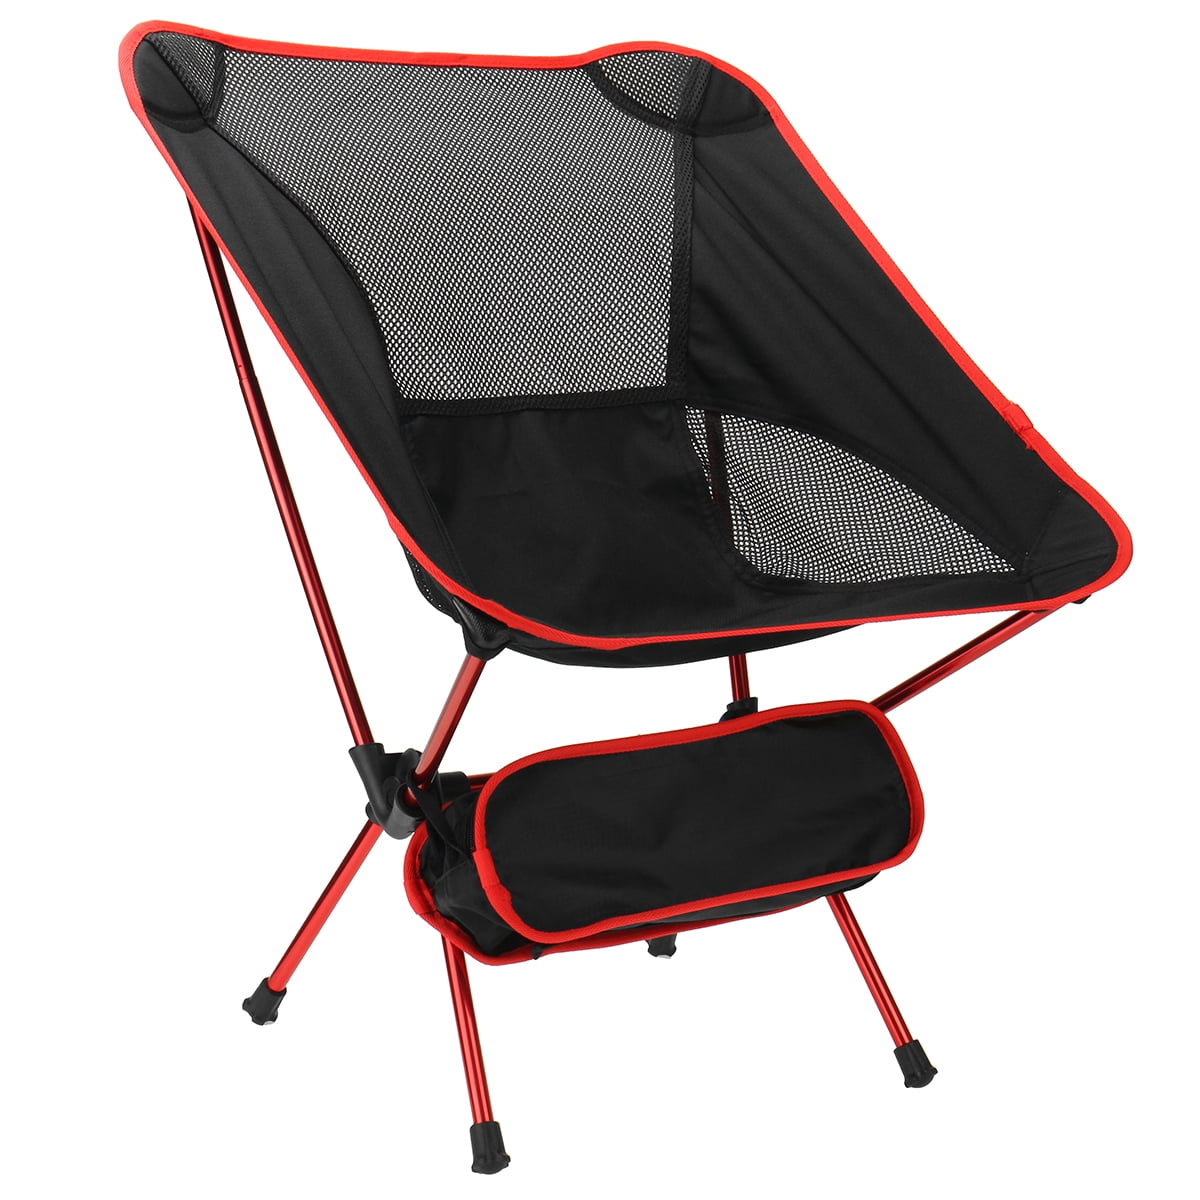 Portable Folding Camping Chair Outdoor Travel Picnic Beach Orange Fishing W/ Bag 